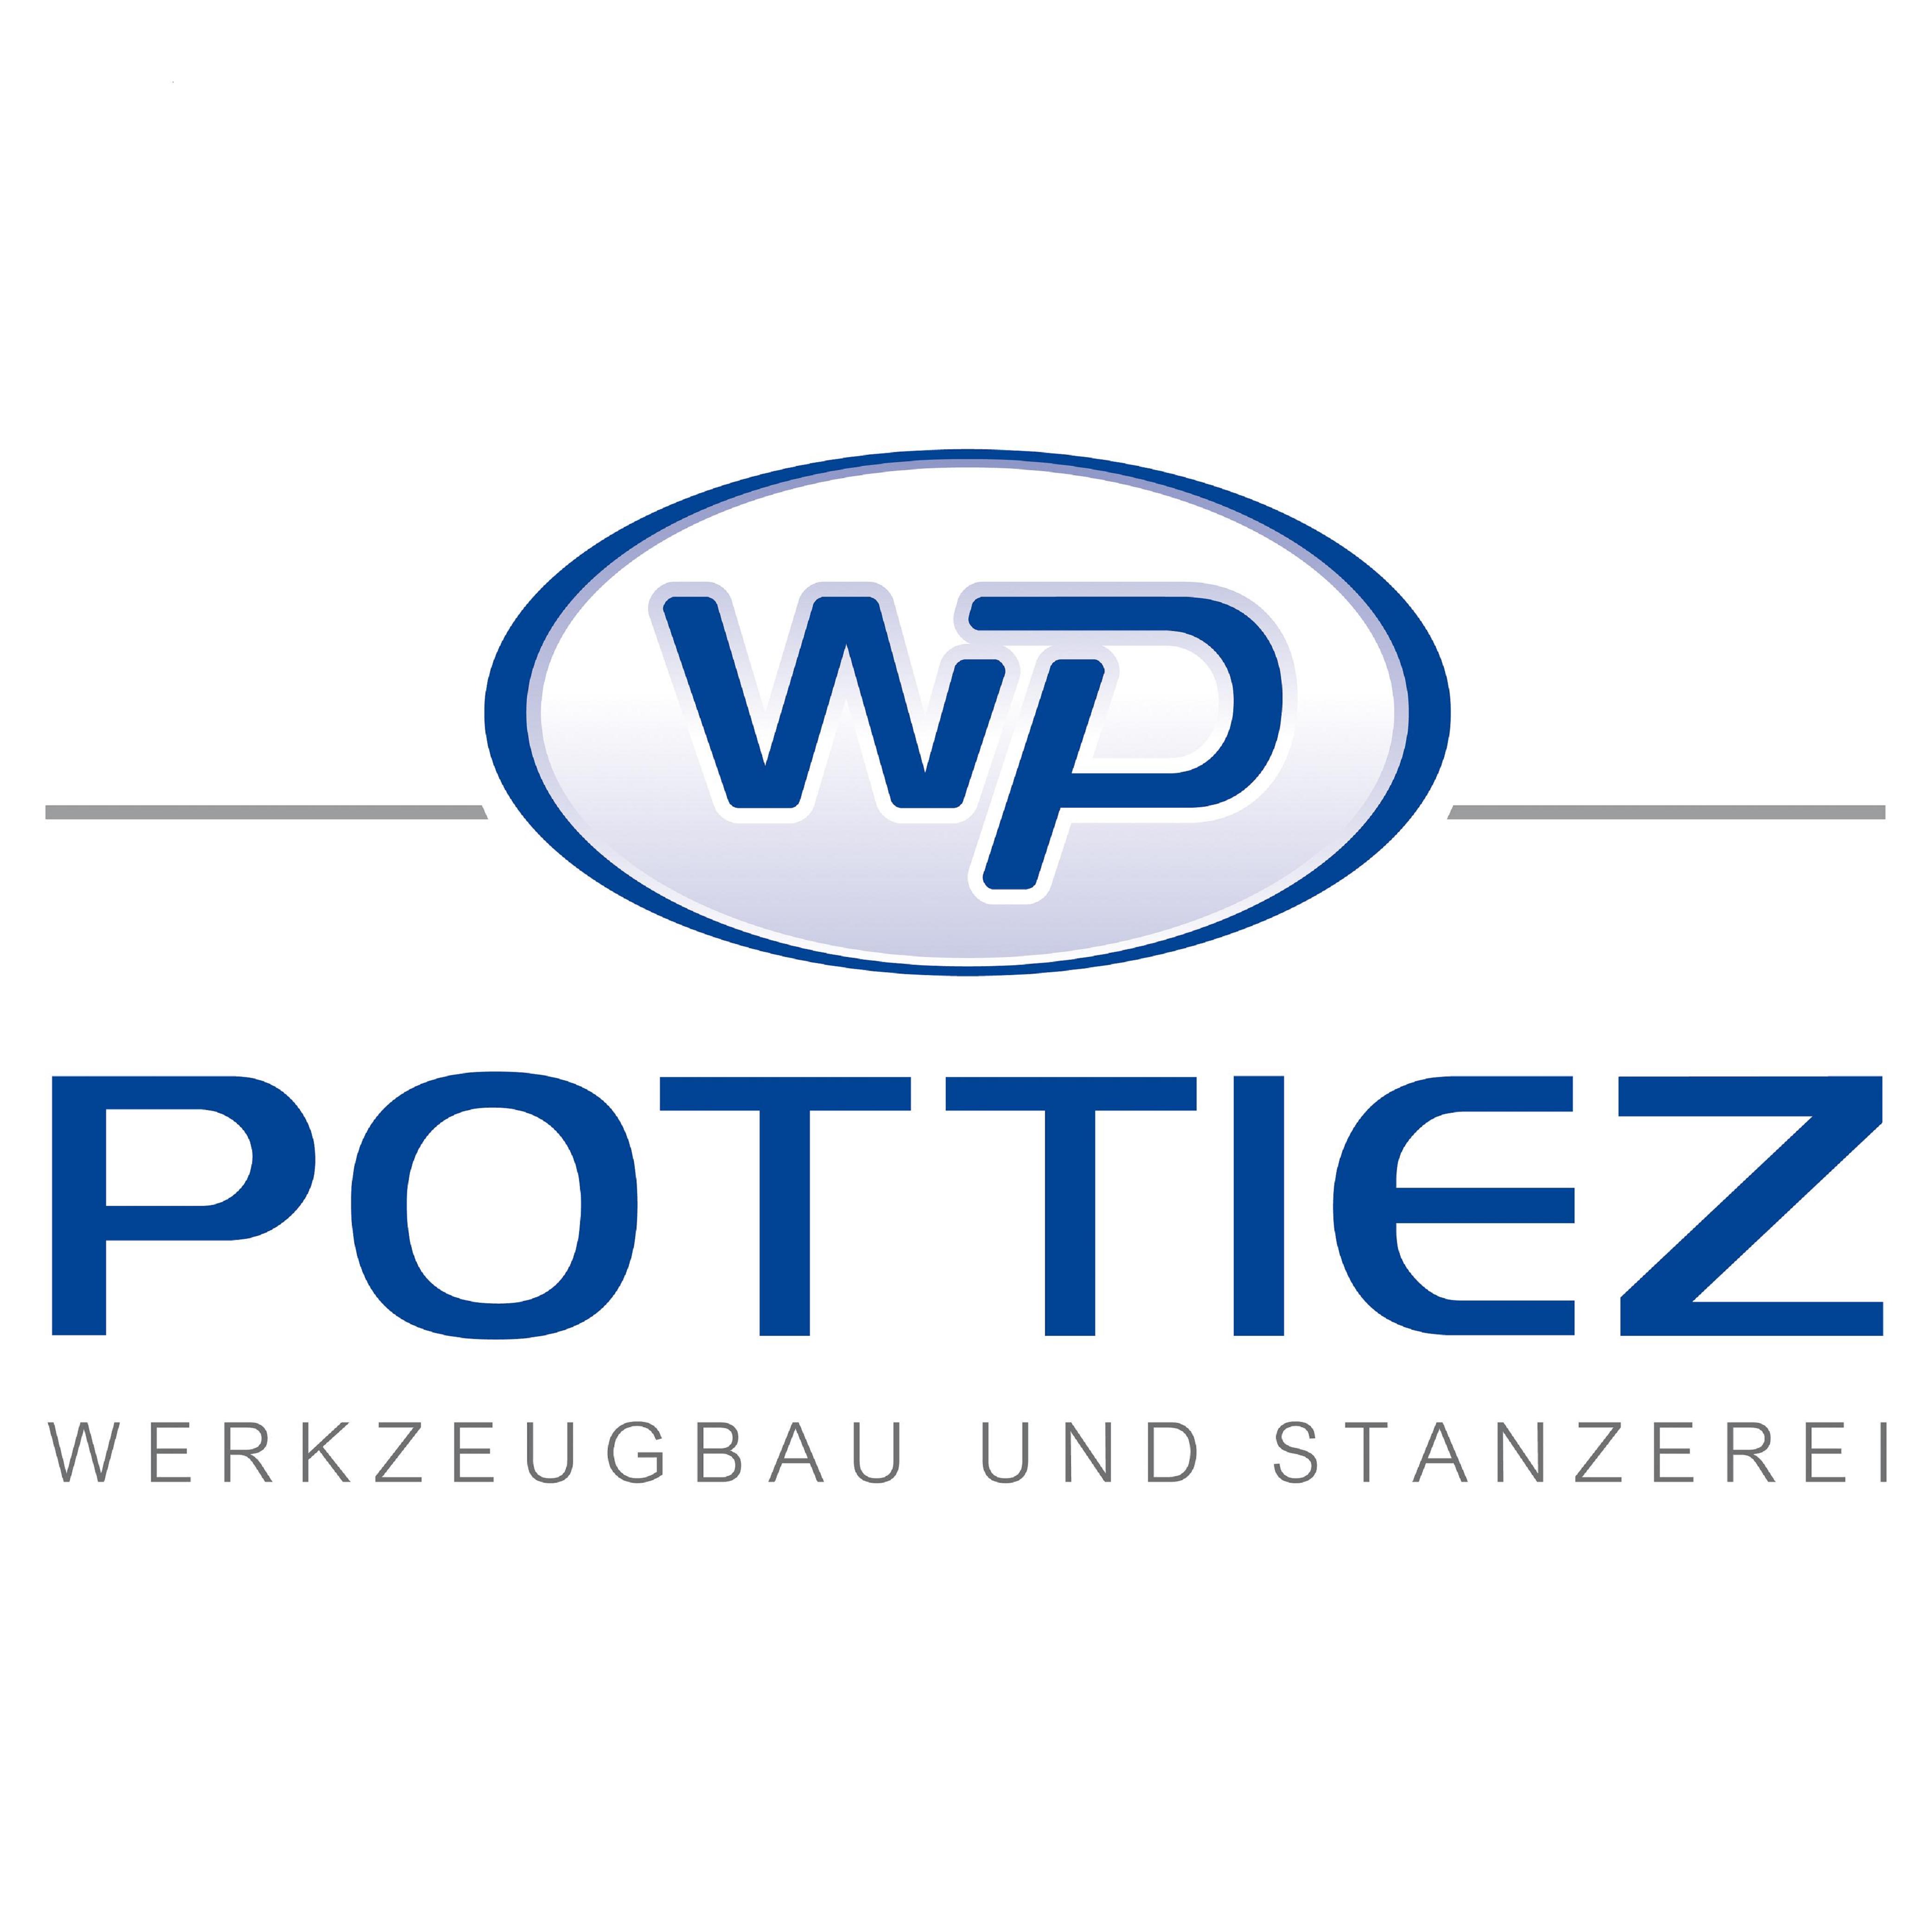 Walter Pottiez GmbH
Werkzeugbau & Stanzerei